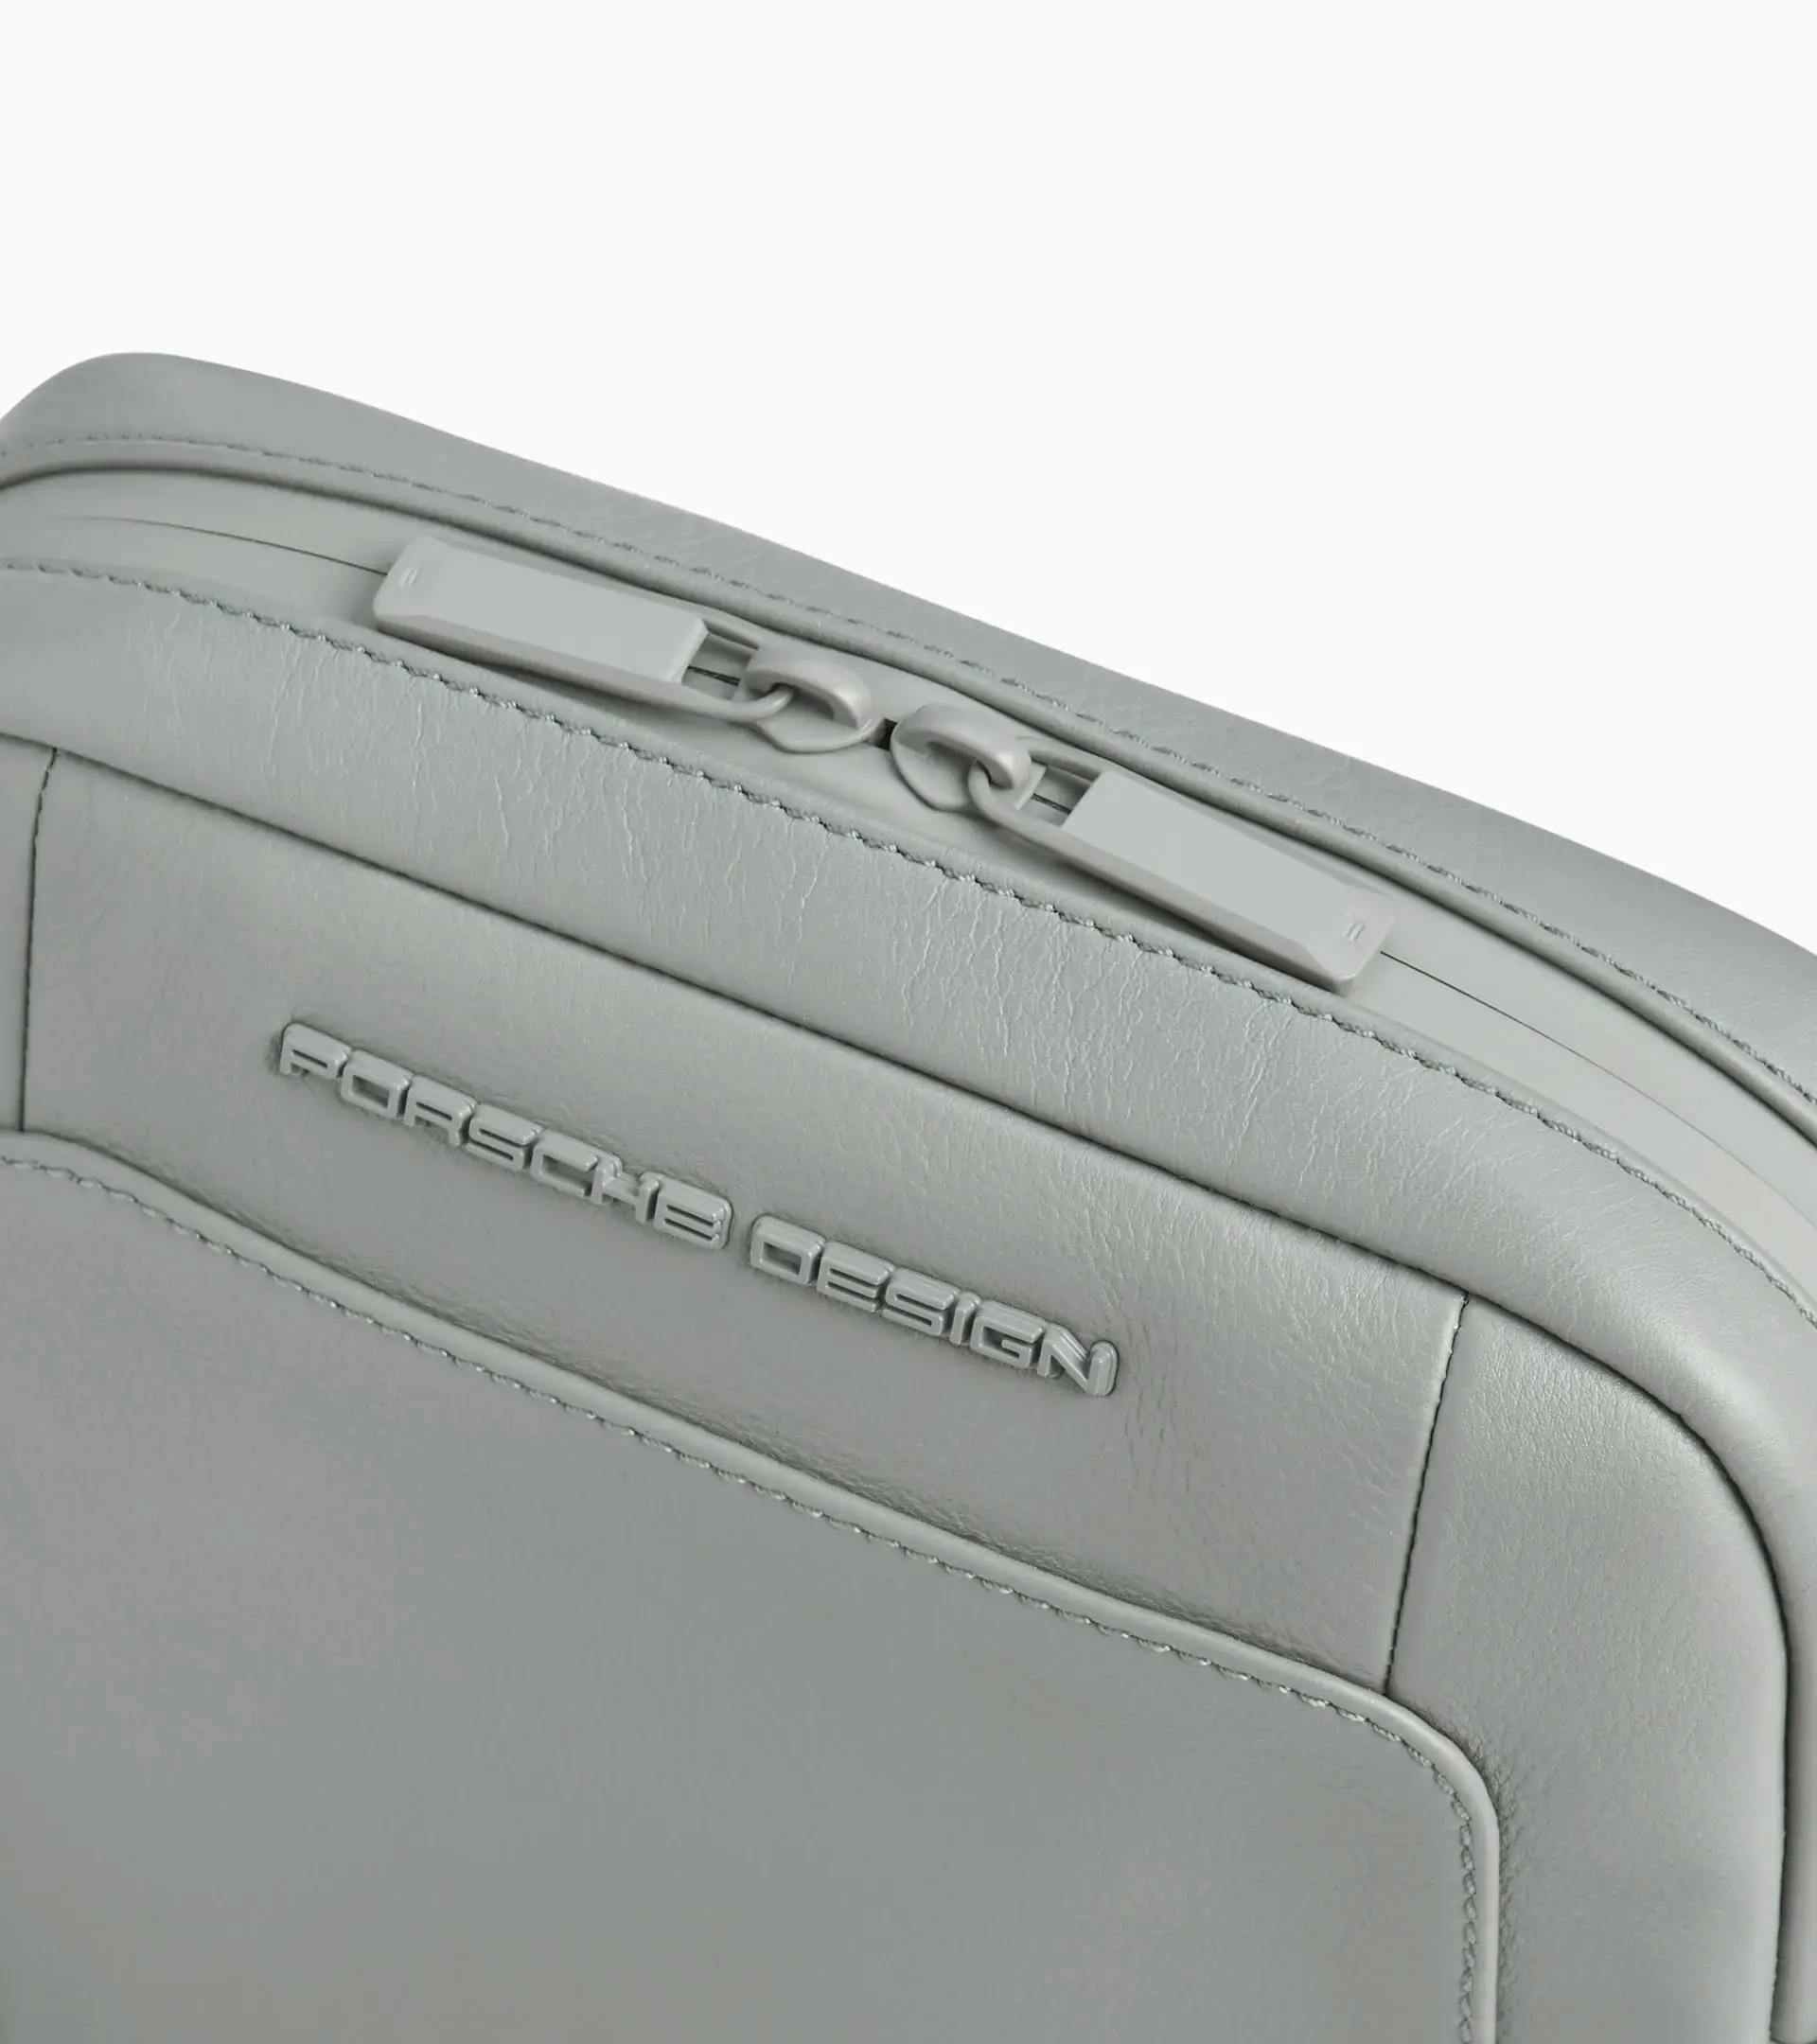 Porsche Design Porsche Design Roadster Leather X-Small Shoulder Bag